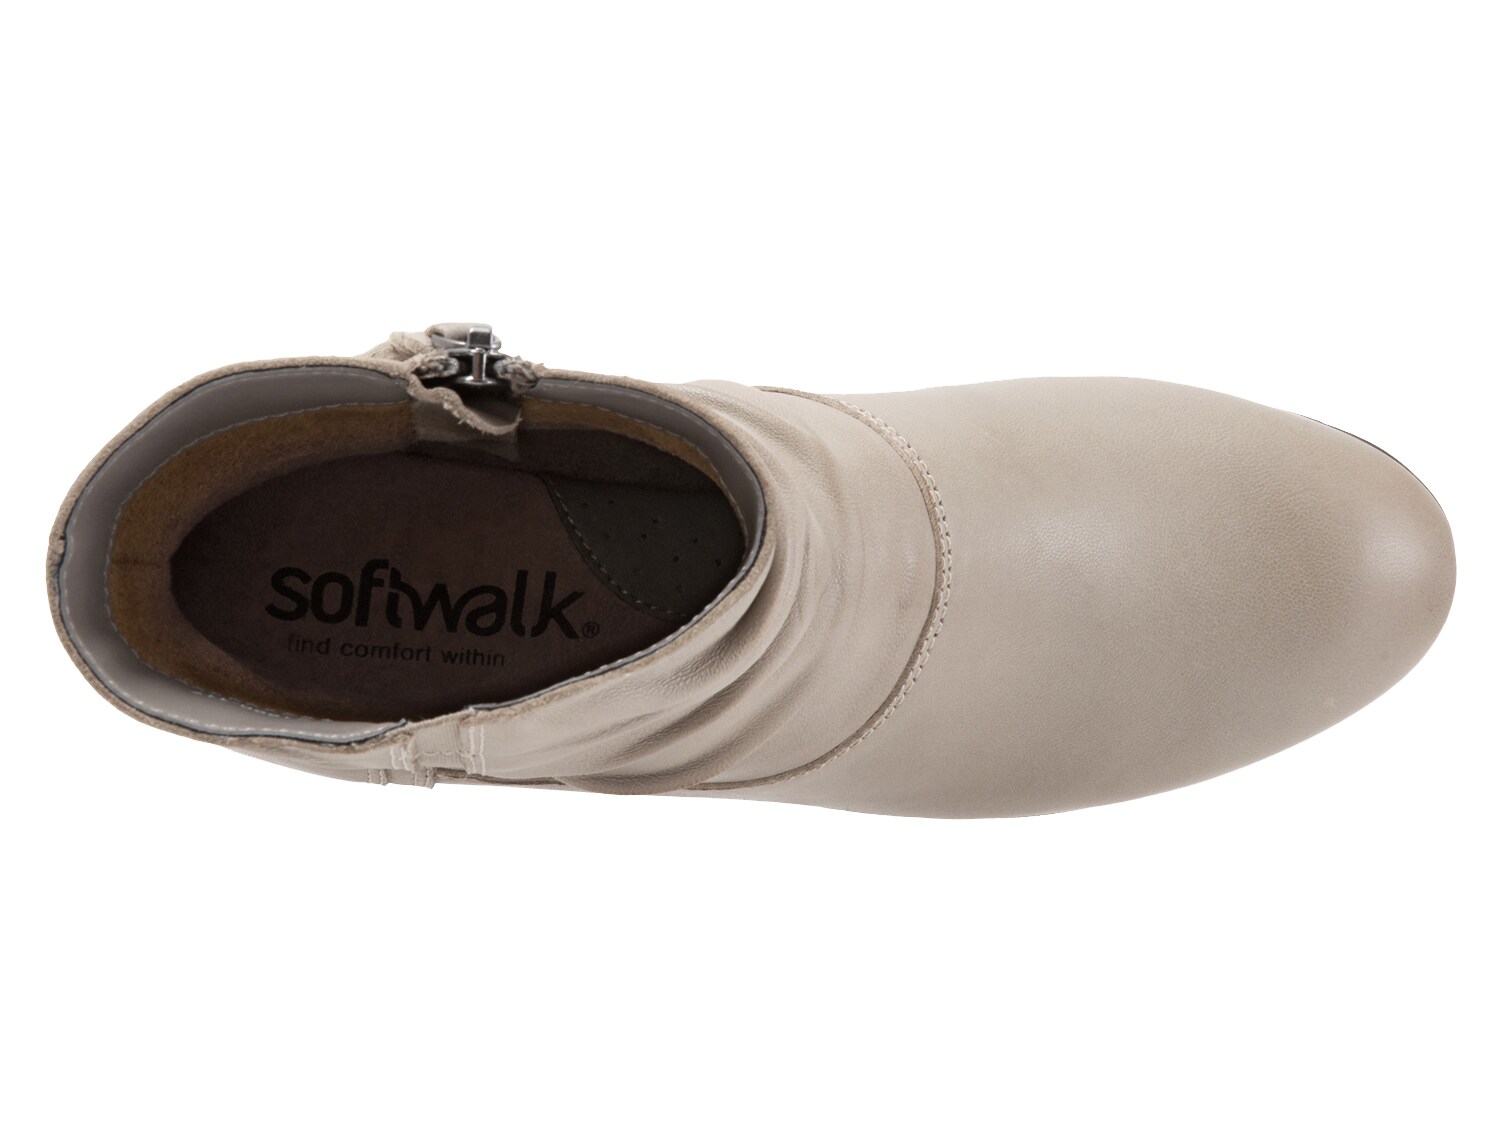 softwalk rochelle